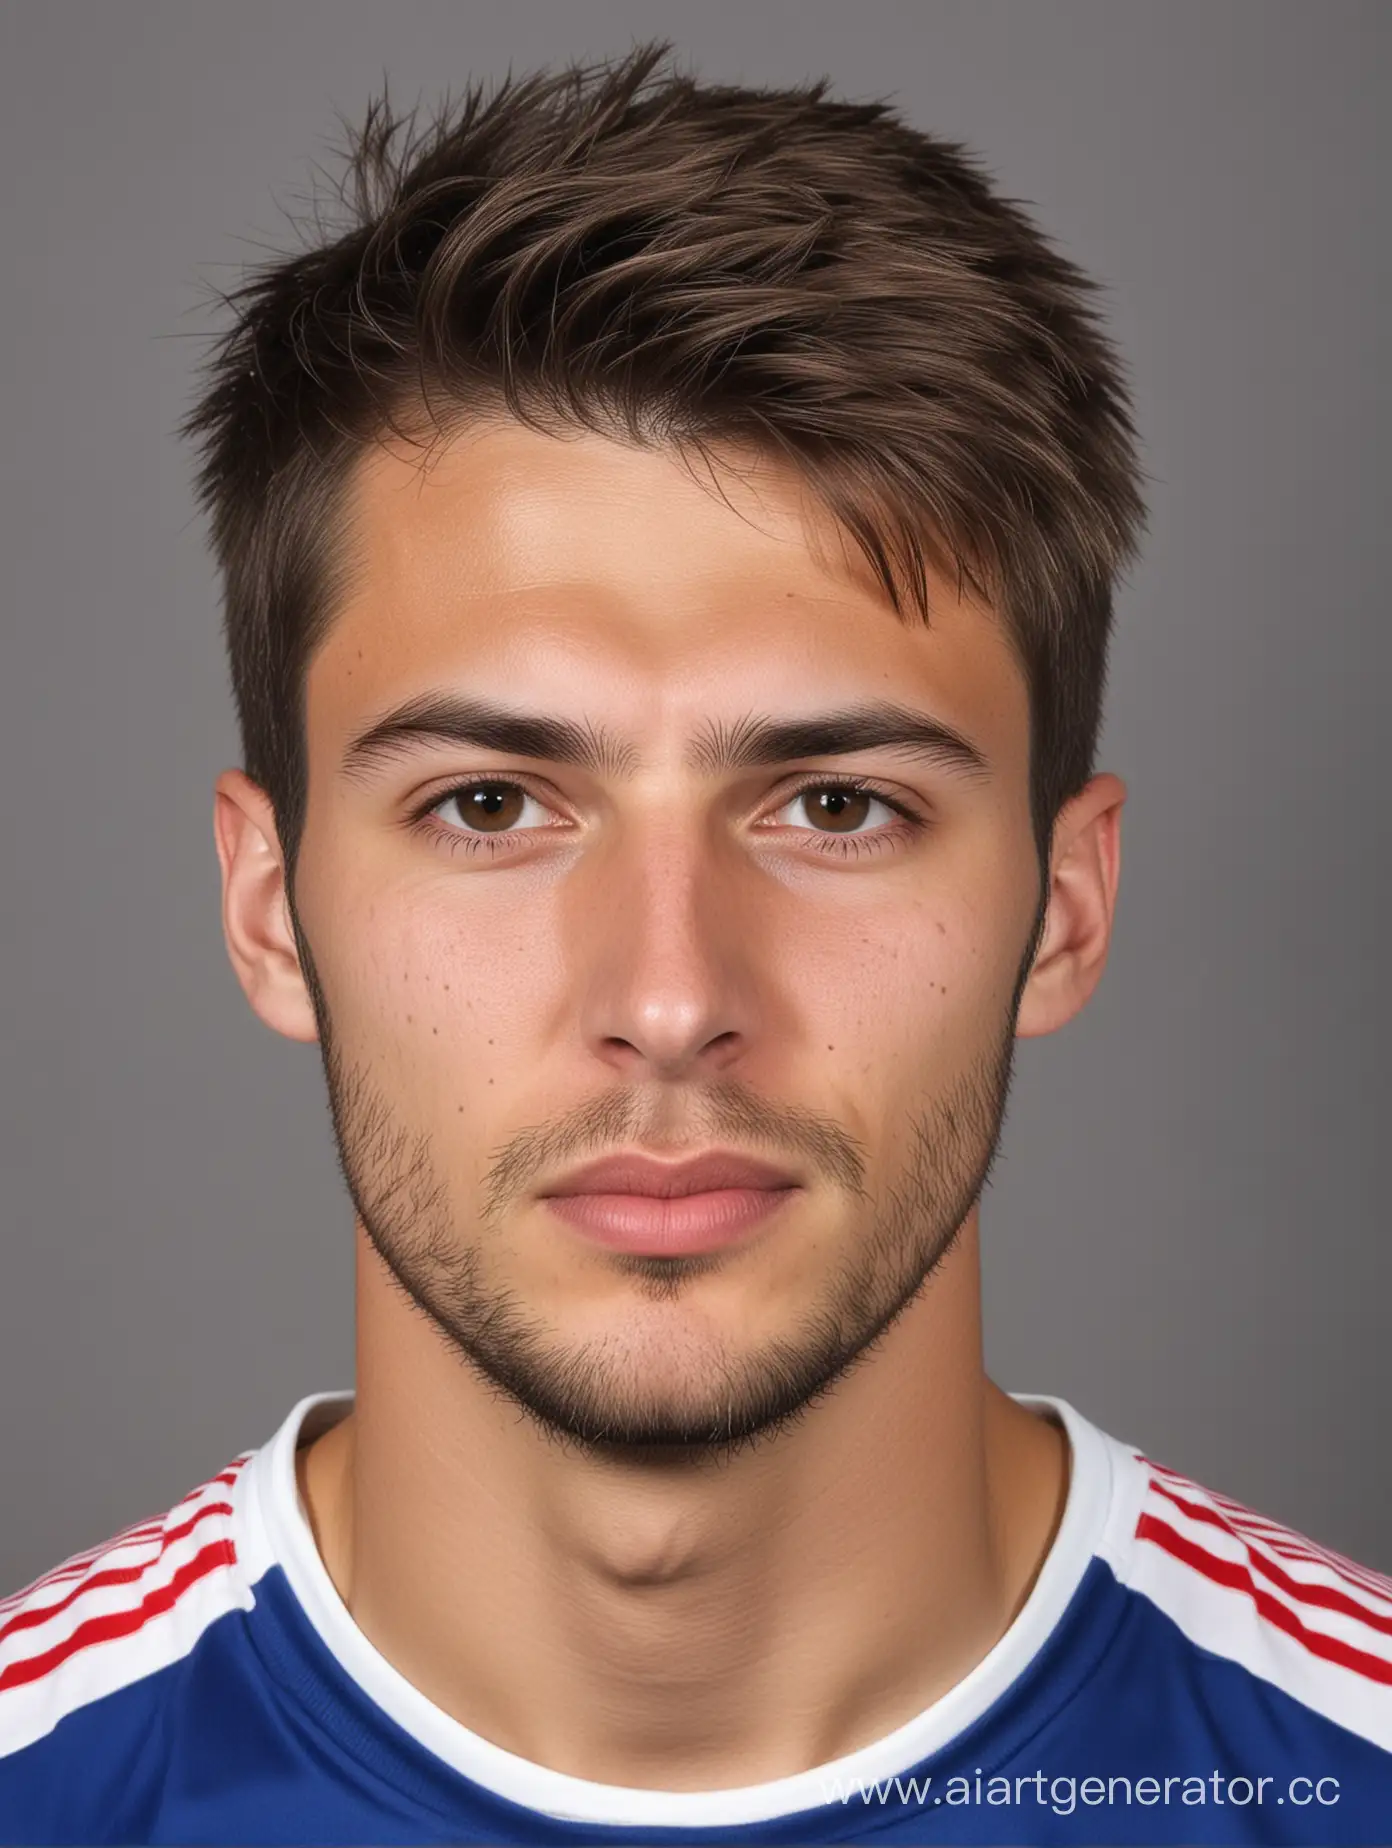 Trendy-Russian-Footballer-with-Short-Stubble-Passport-Portrait-at-25